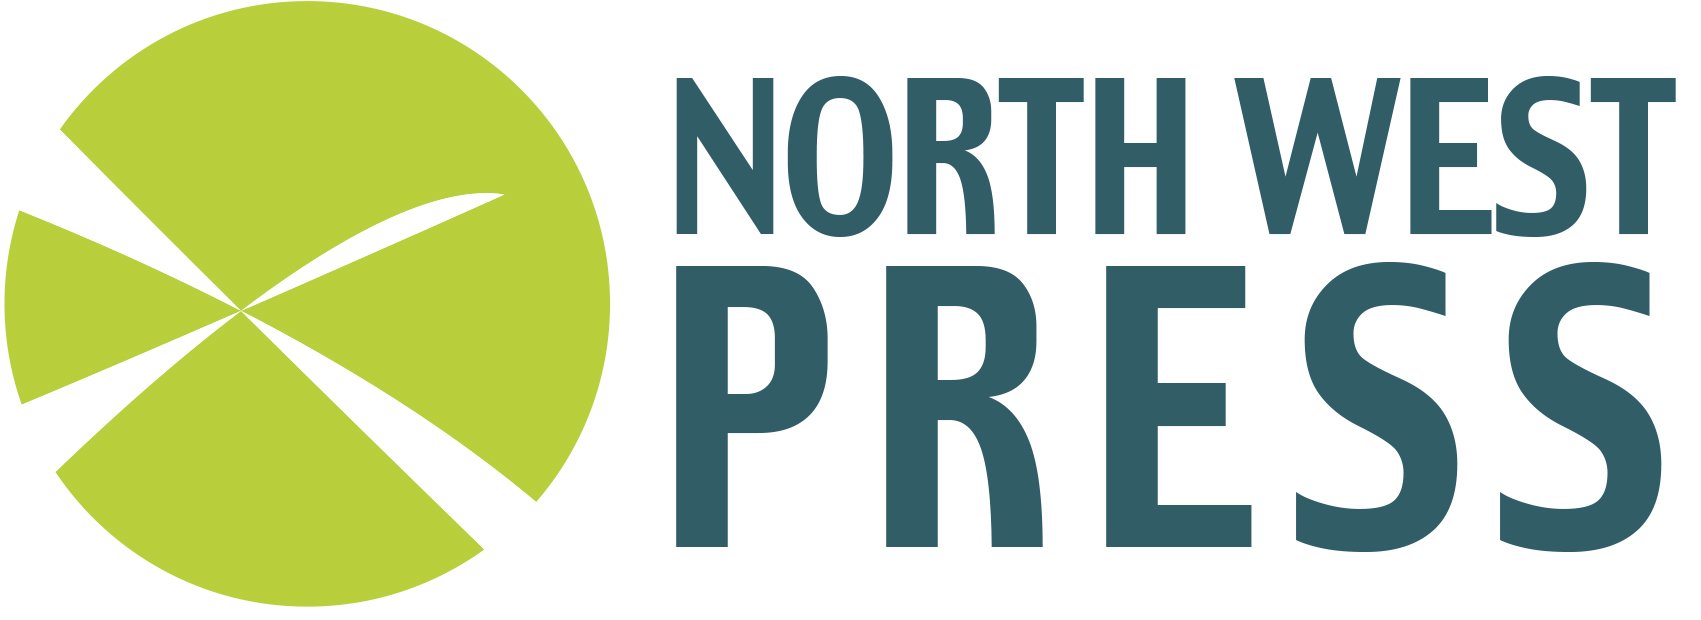 North West Press logo.jpg